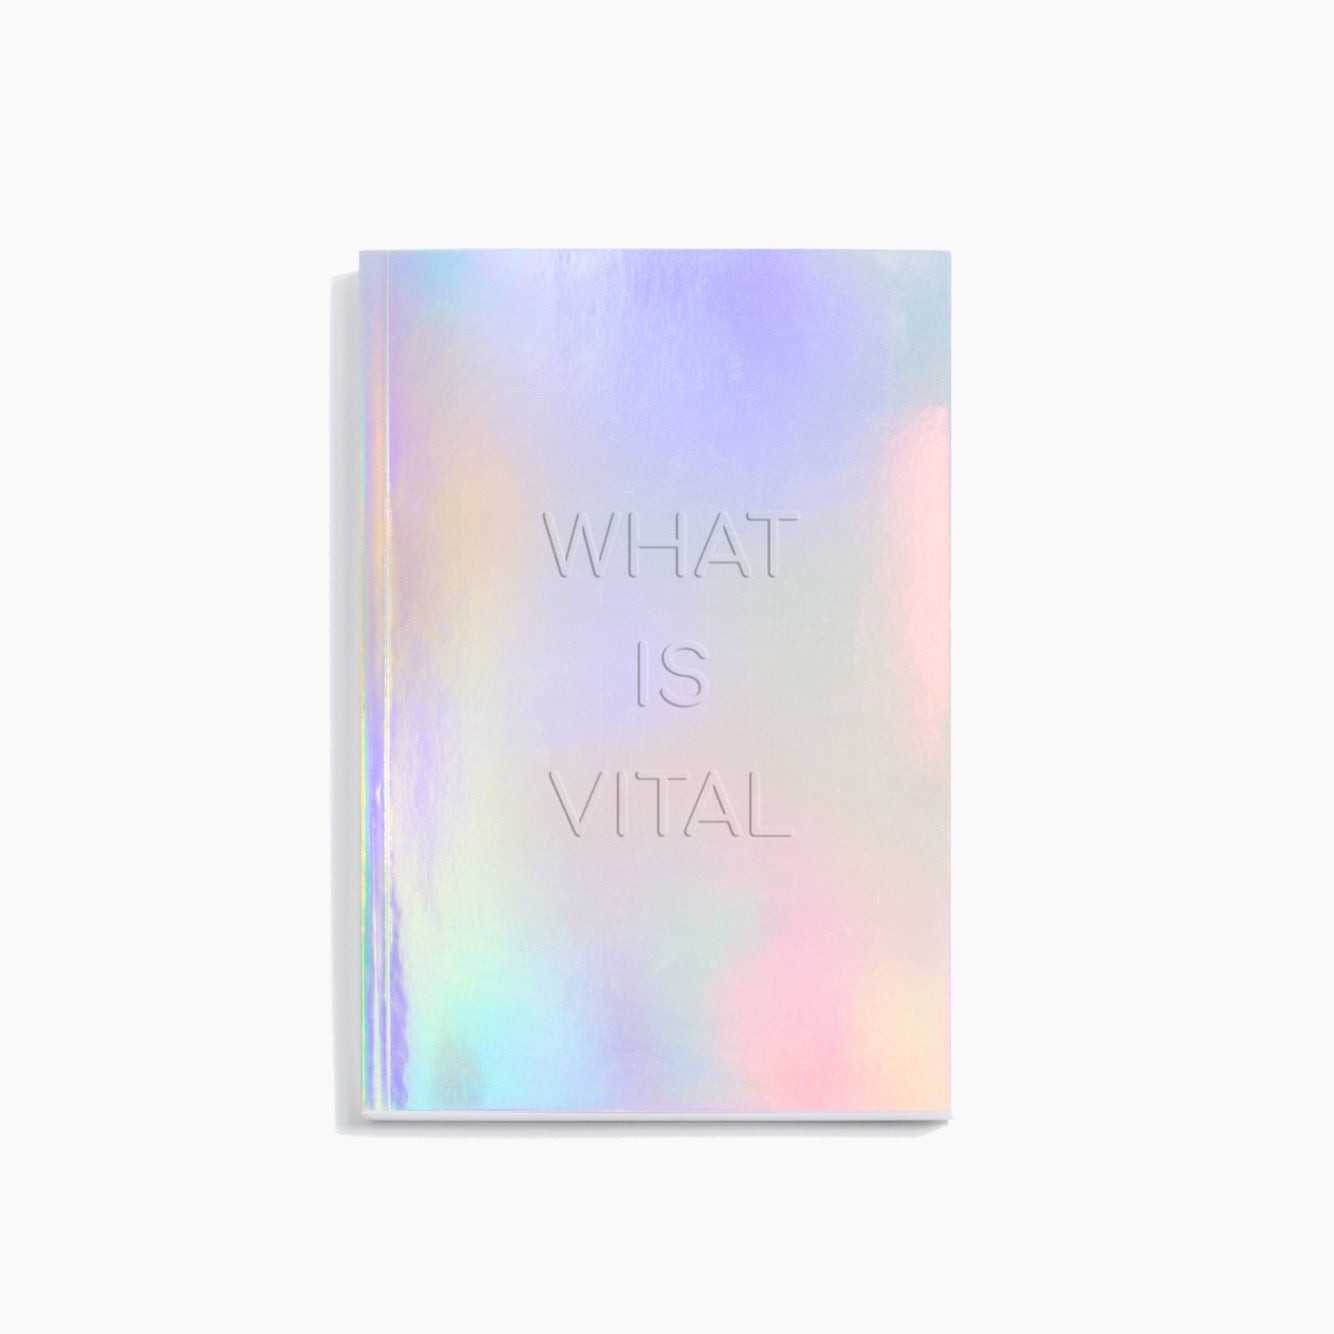 WHAT IS VITAL (blank journal)